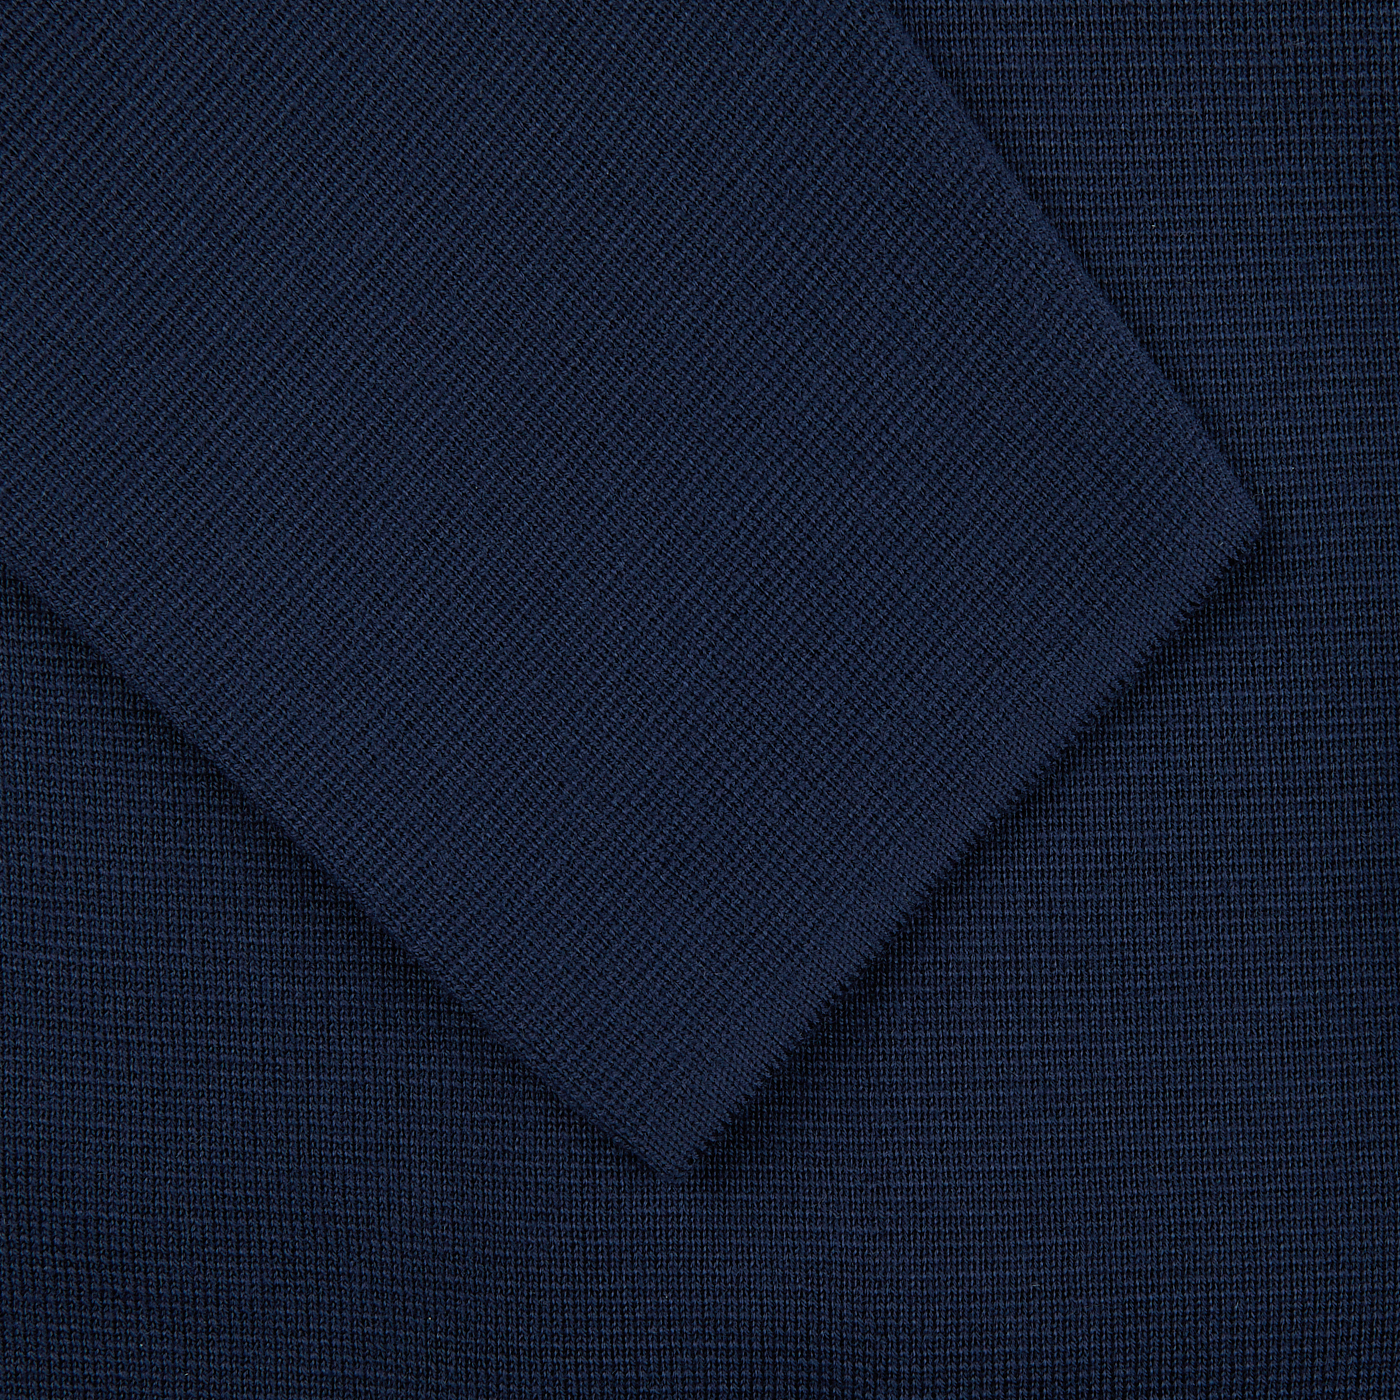 A close up of a Maurizio Baldassari Navy Blue Merino Wool Milano Stitch Swacket.